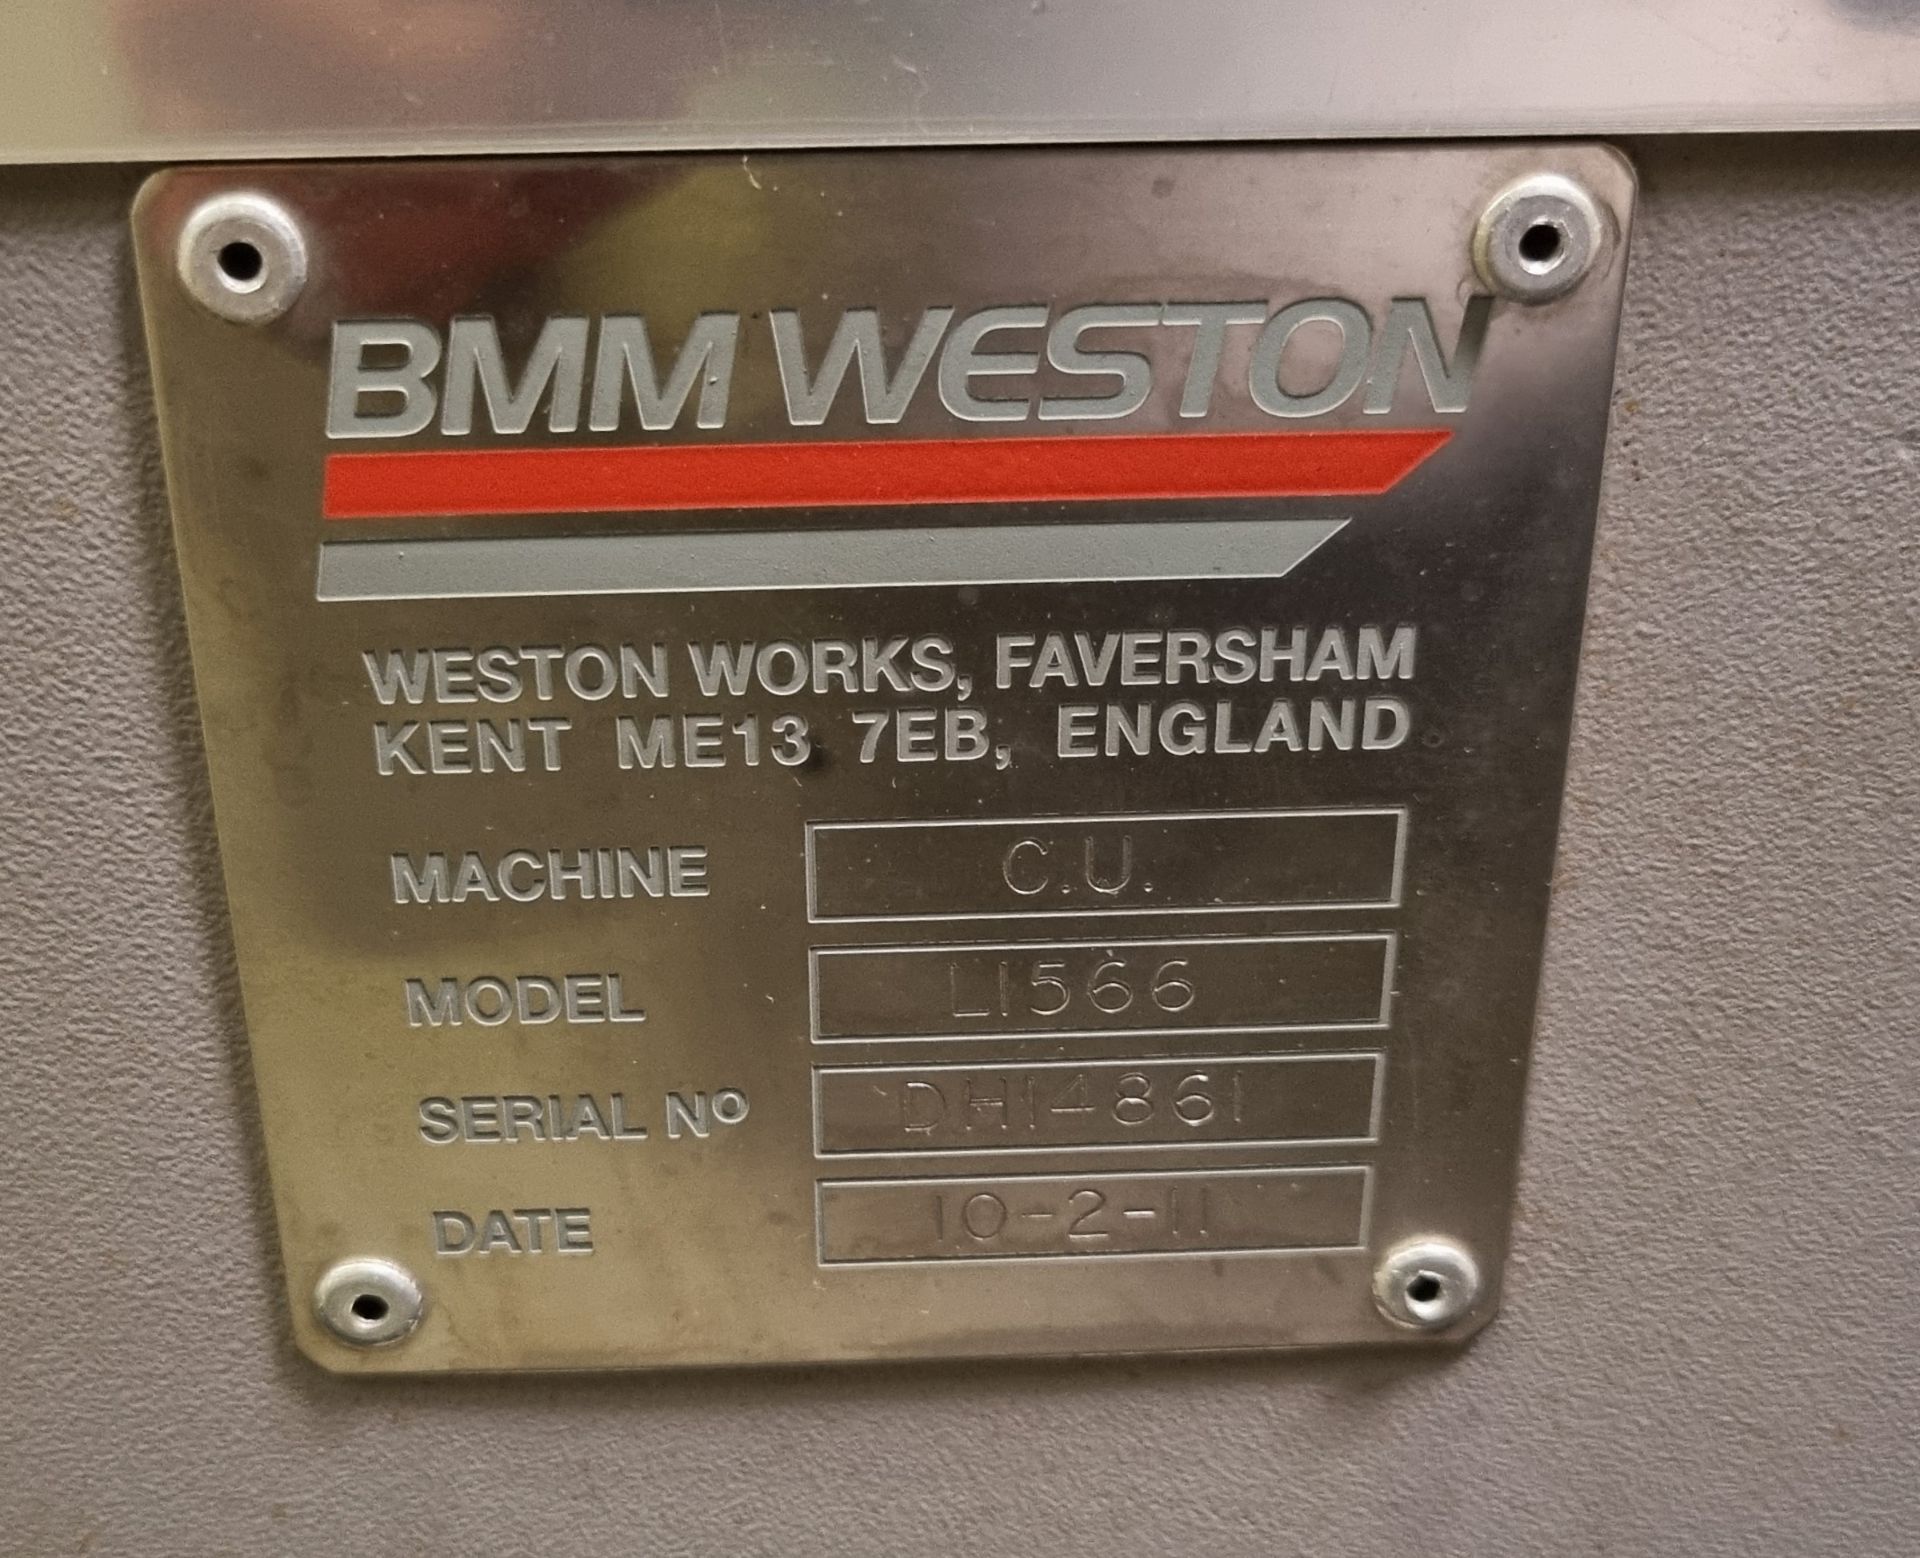 BMM Weston L1566 industrial laundry press - 440V - W 1650 x D 1000 x H 1350mm - Image 6 of 15